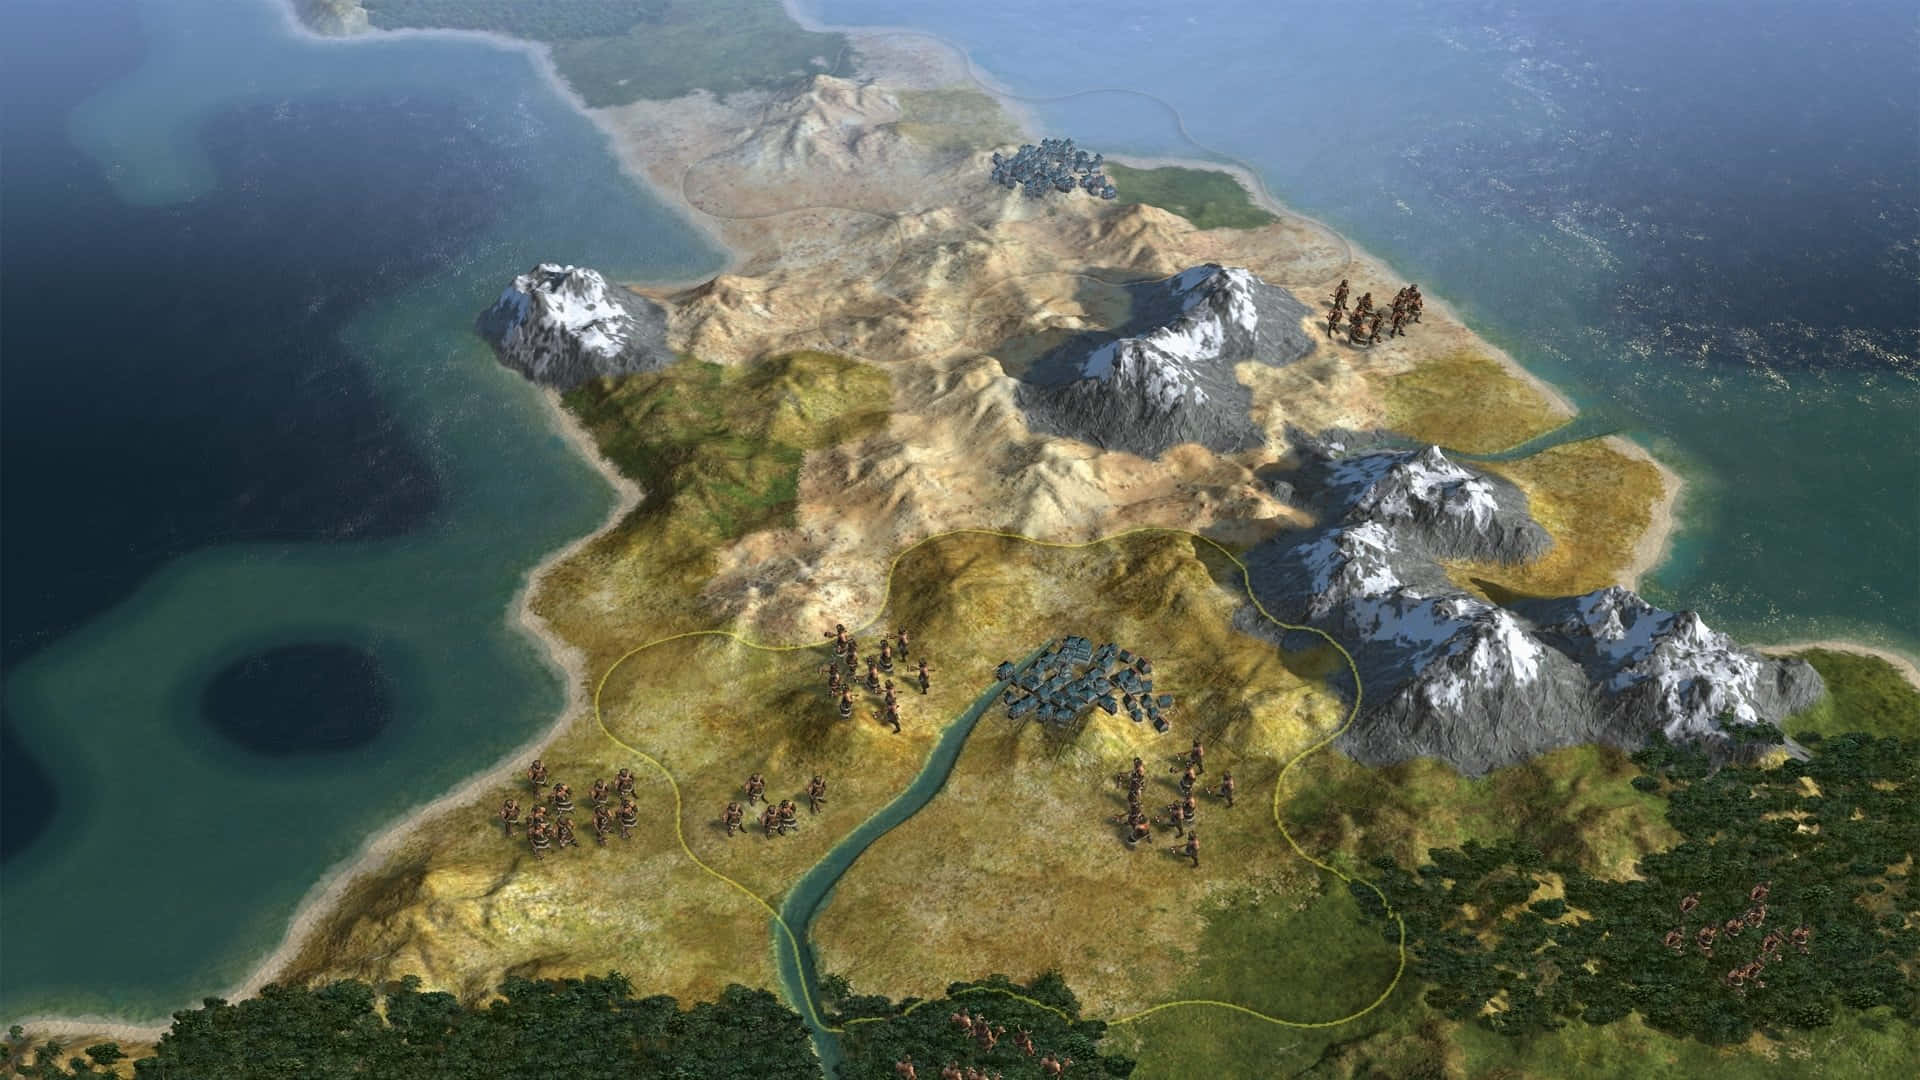 "Civilization V Gameplay in Stunning High Definition Resolution"